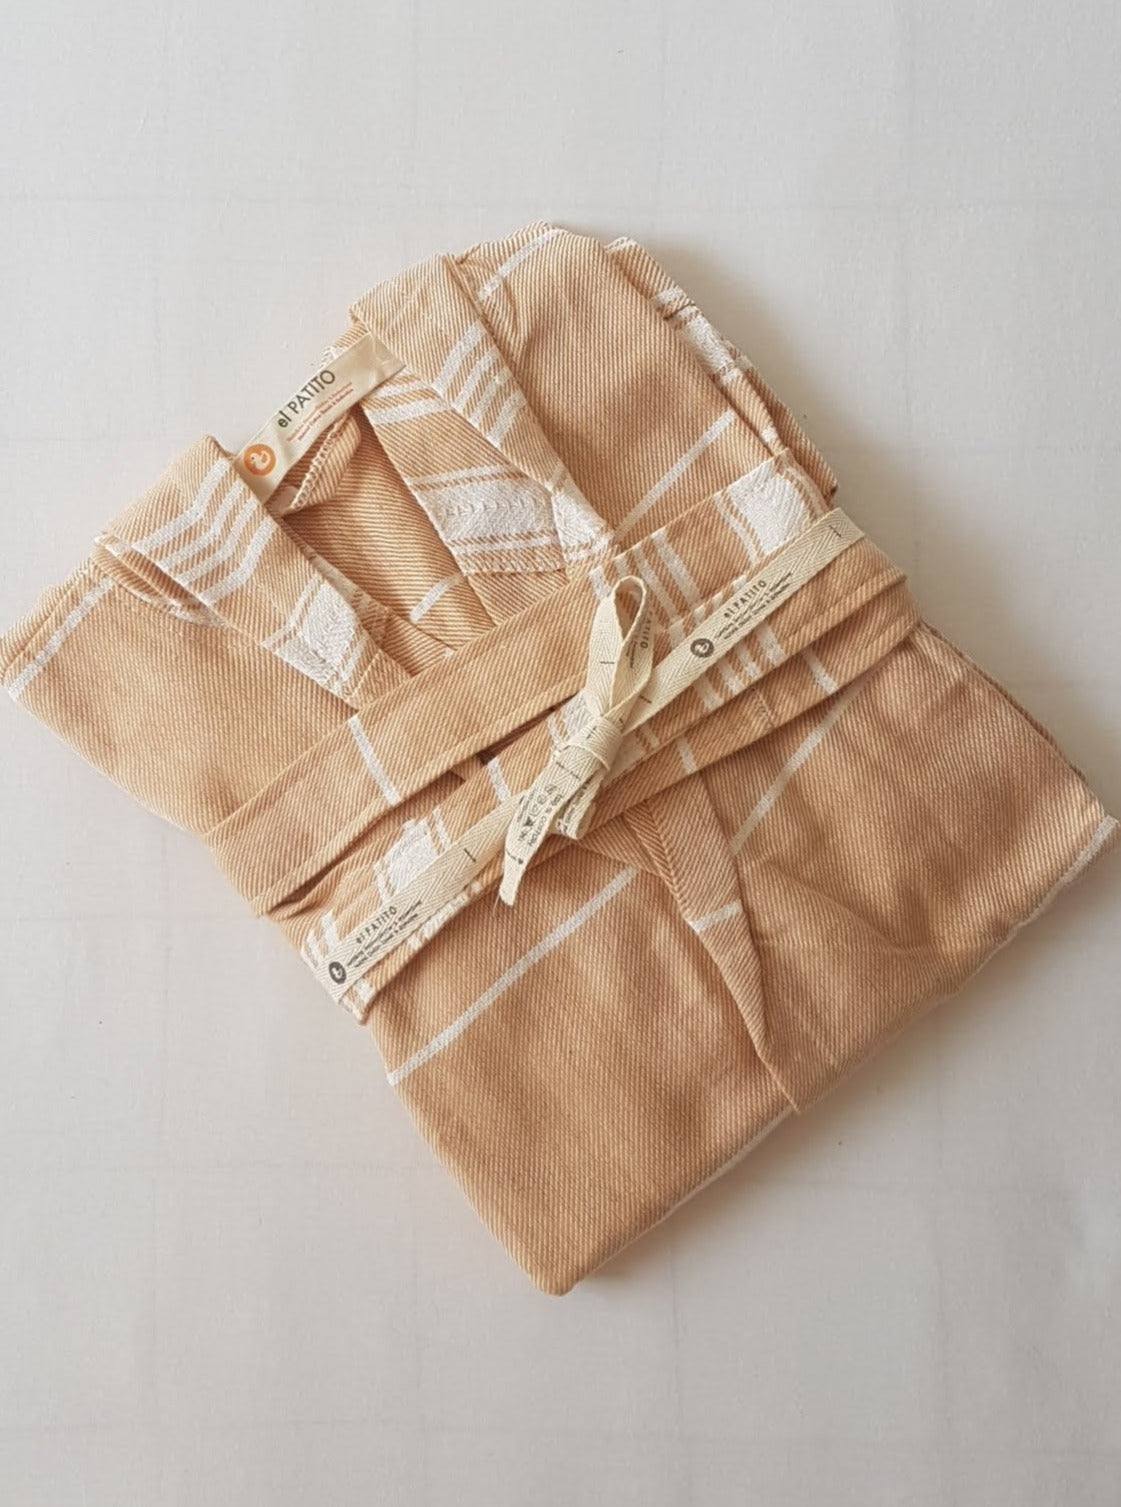 el patito towels and bathrobes traditional series striped model 100% turkish cotton towel bathrobe summer robe mustard